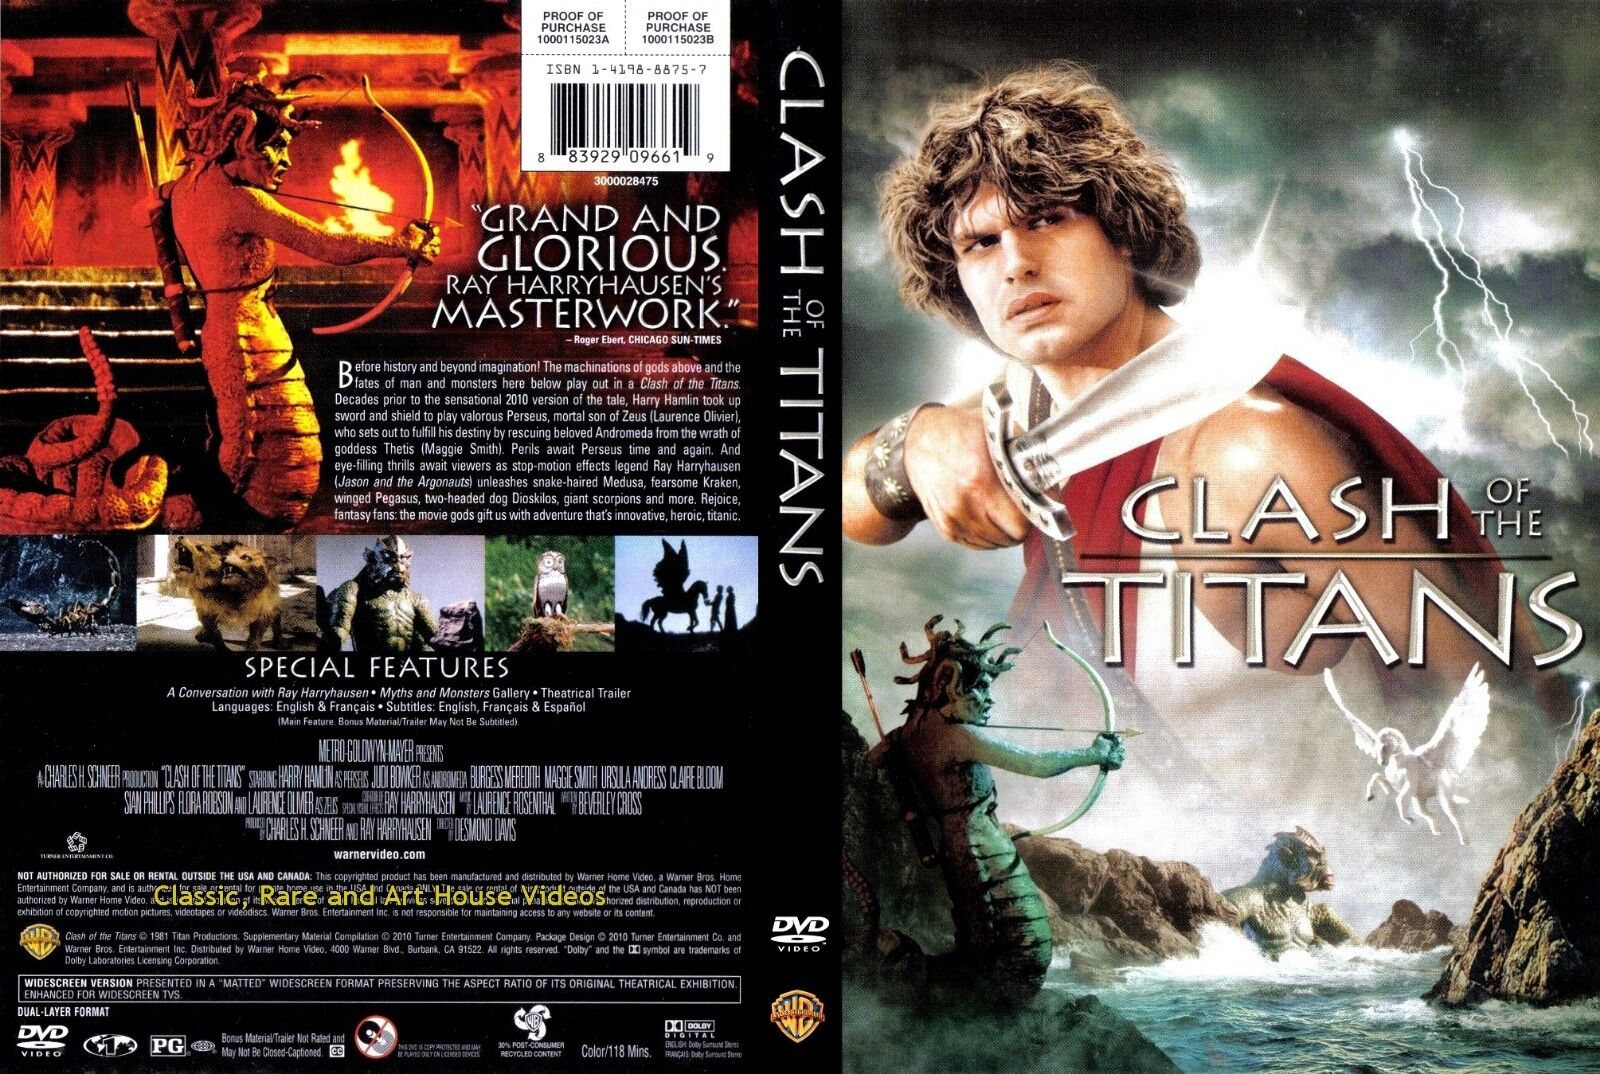 Clash of the Titans ~ DVD ~ Harry Hamlin (1981)